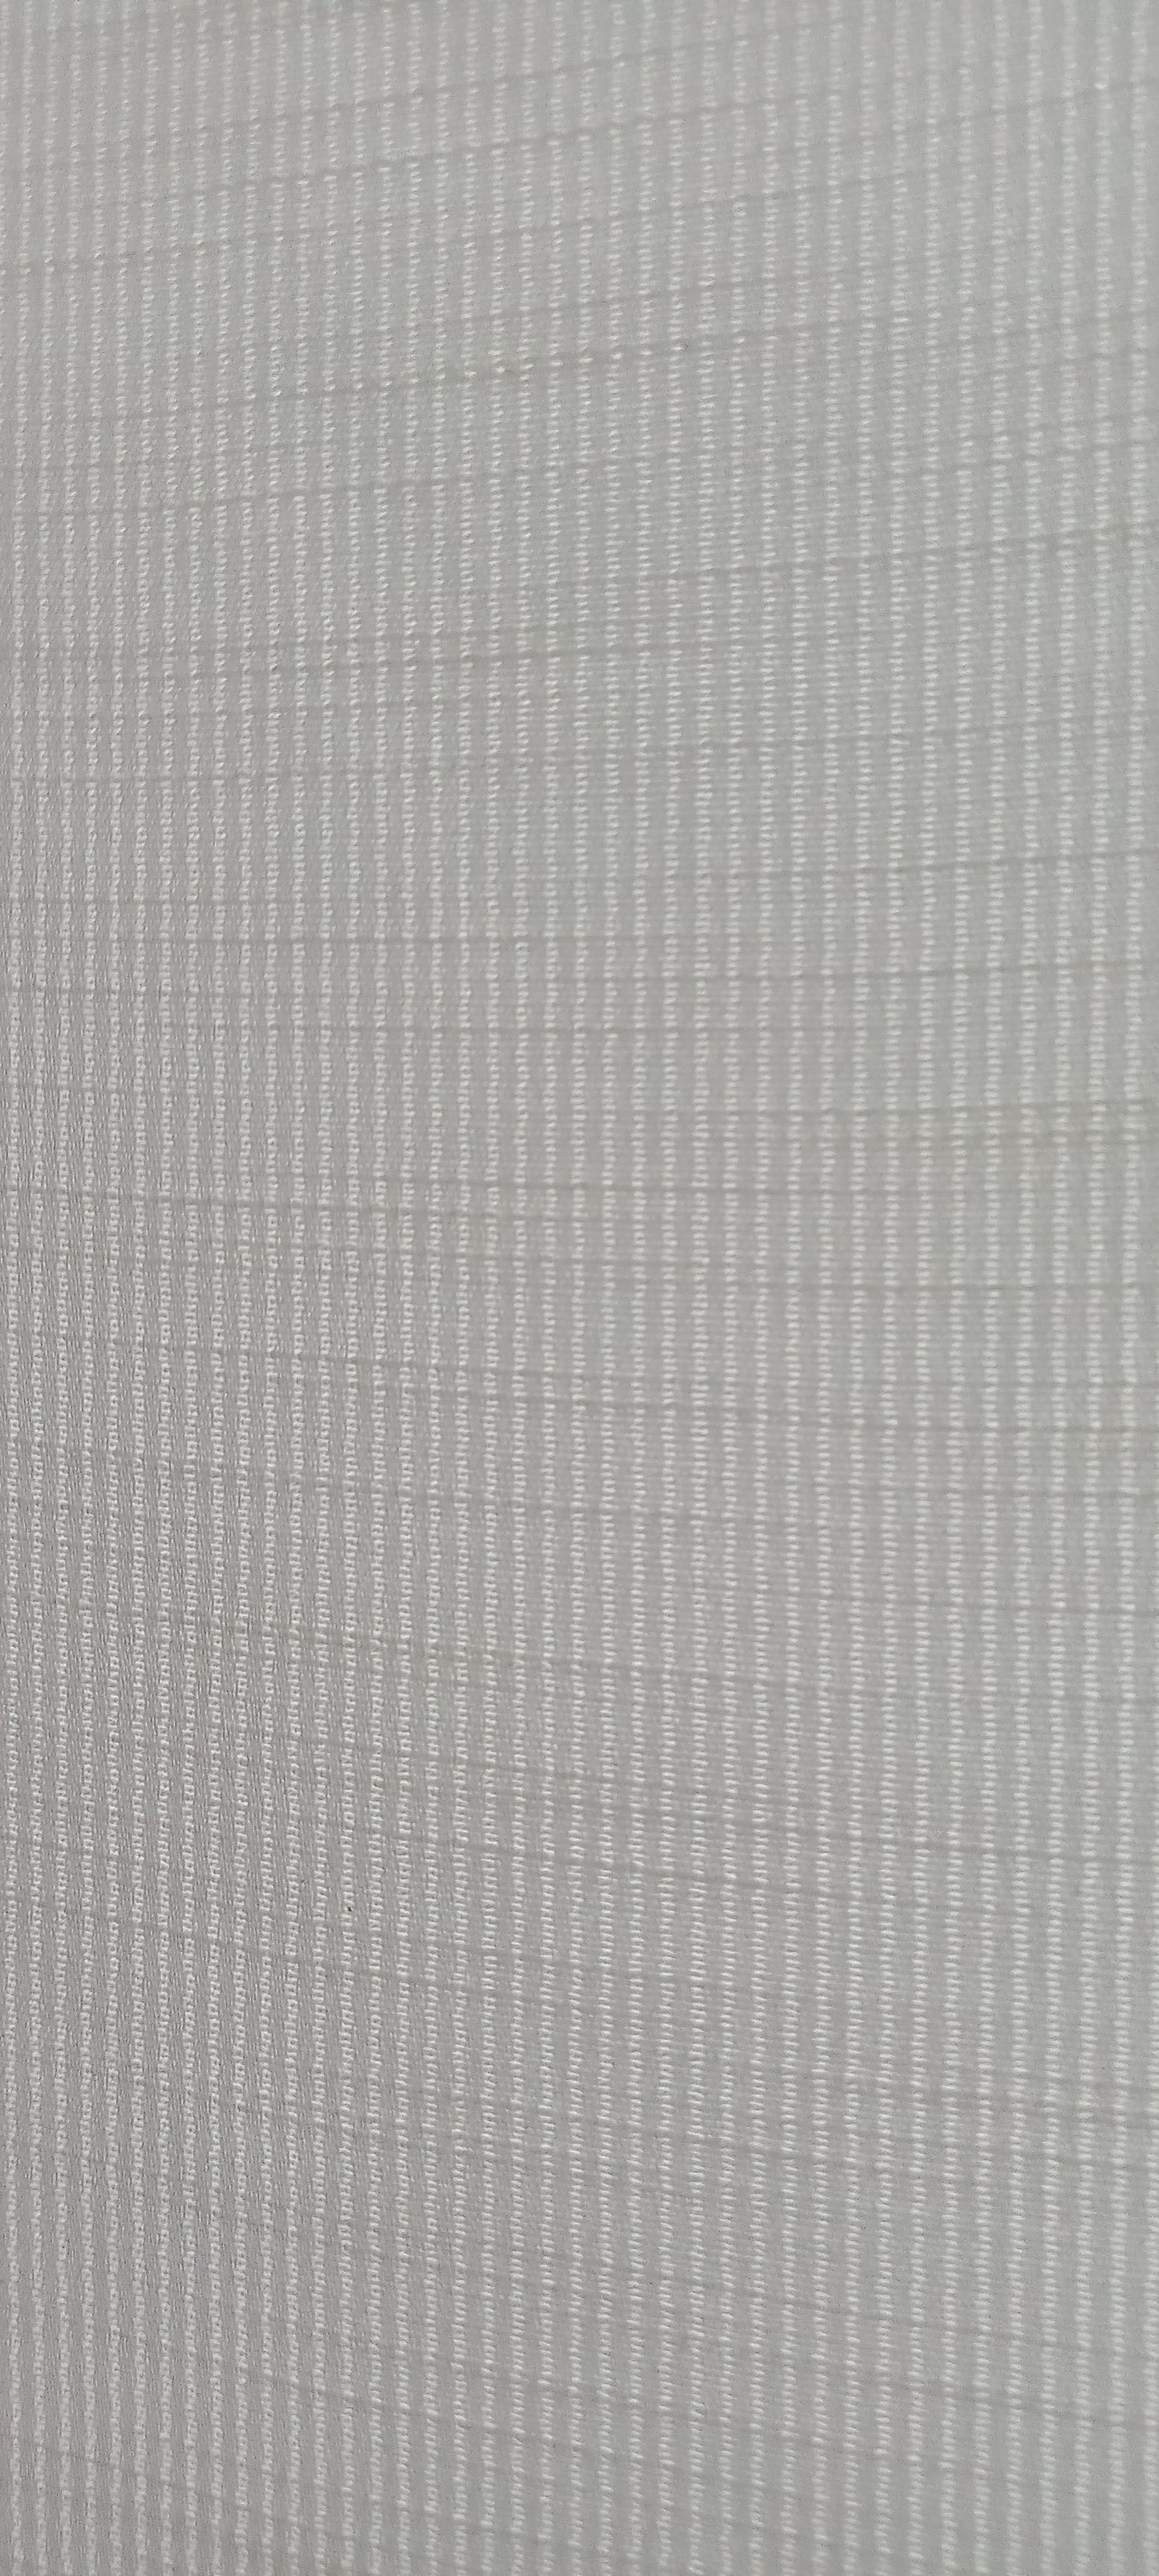 Millimetre Cotton-Linen Blend Look Fabric by Simran G Decor